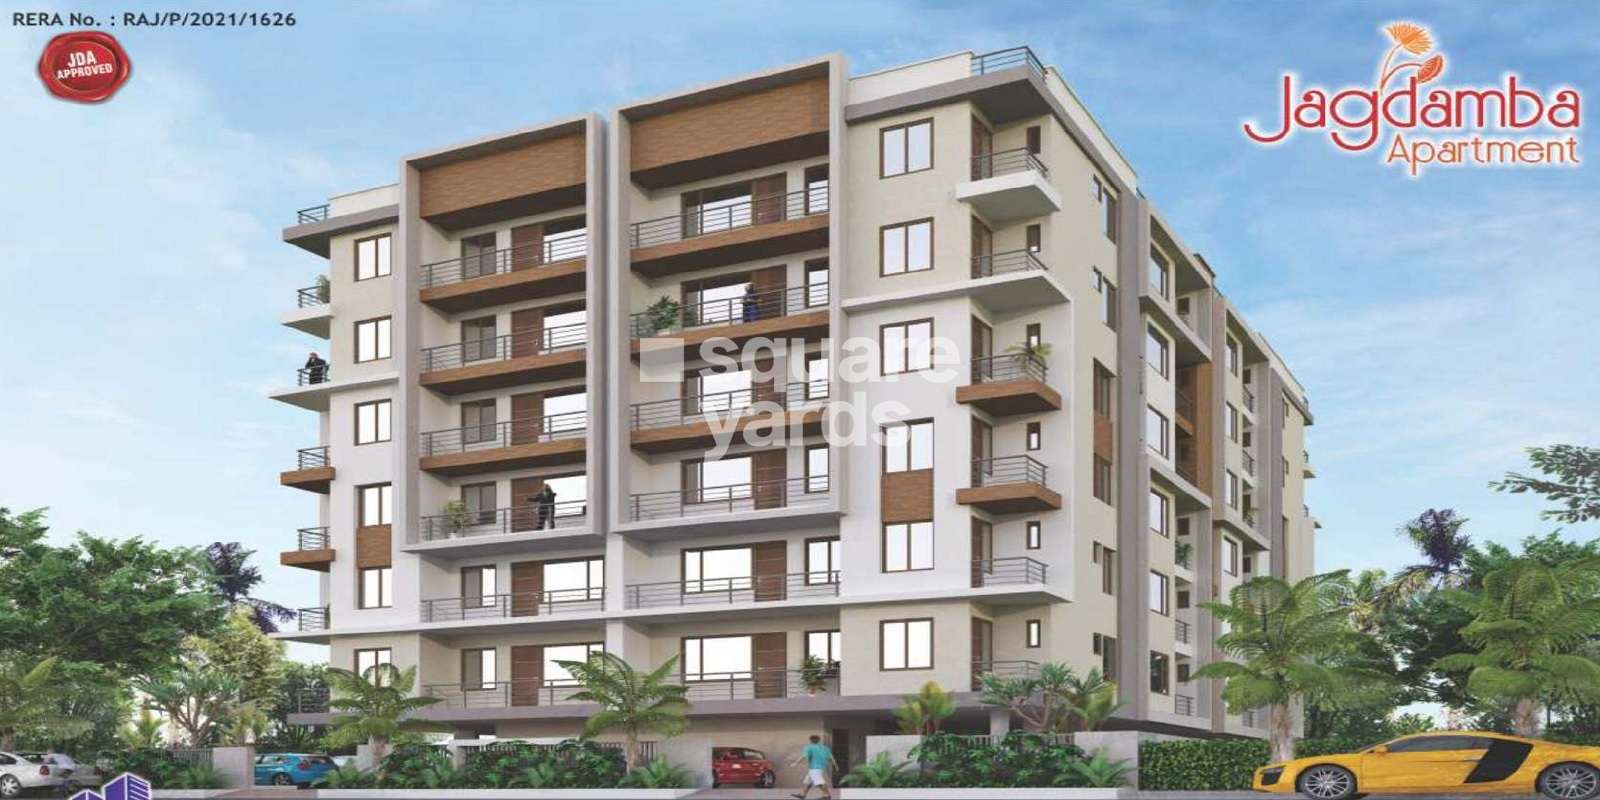 Jagdamba Apartments Mansarovar Cover Image